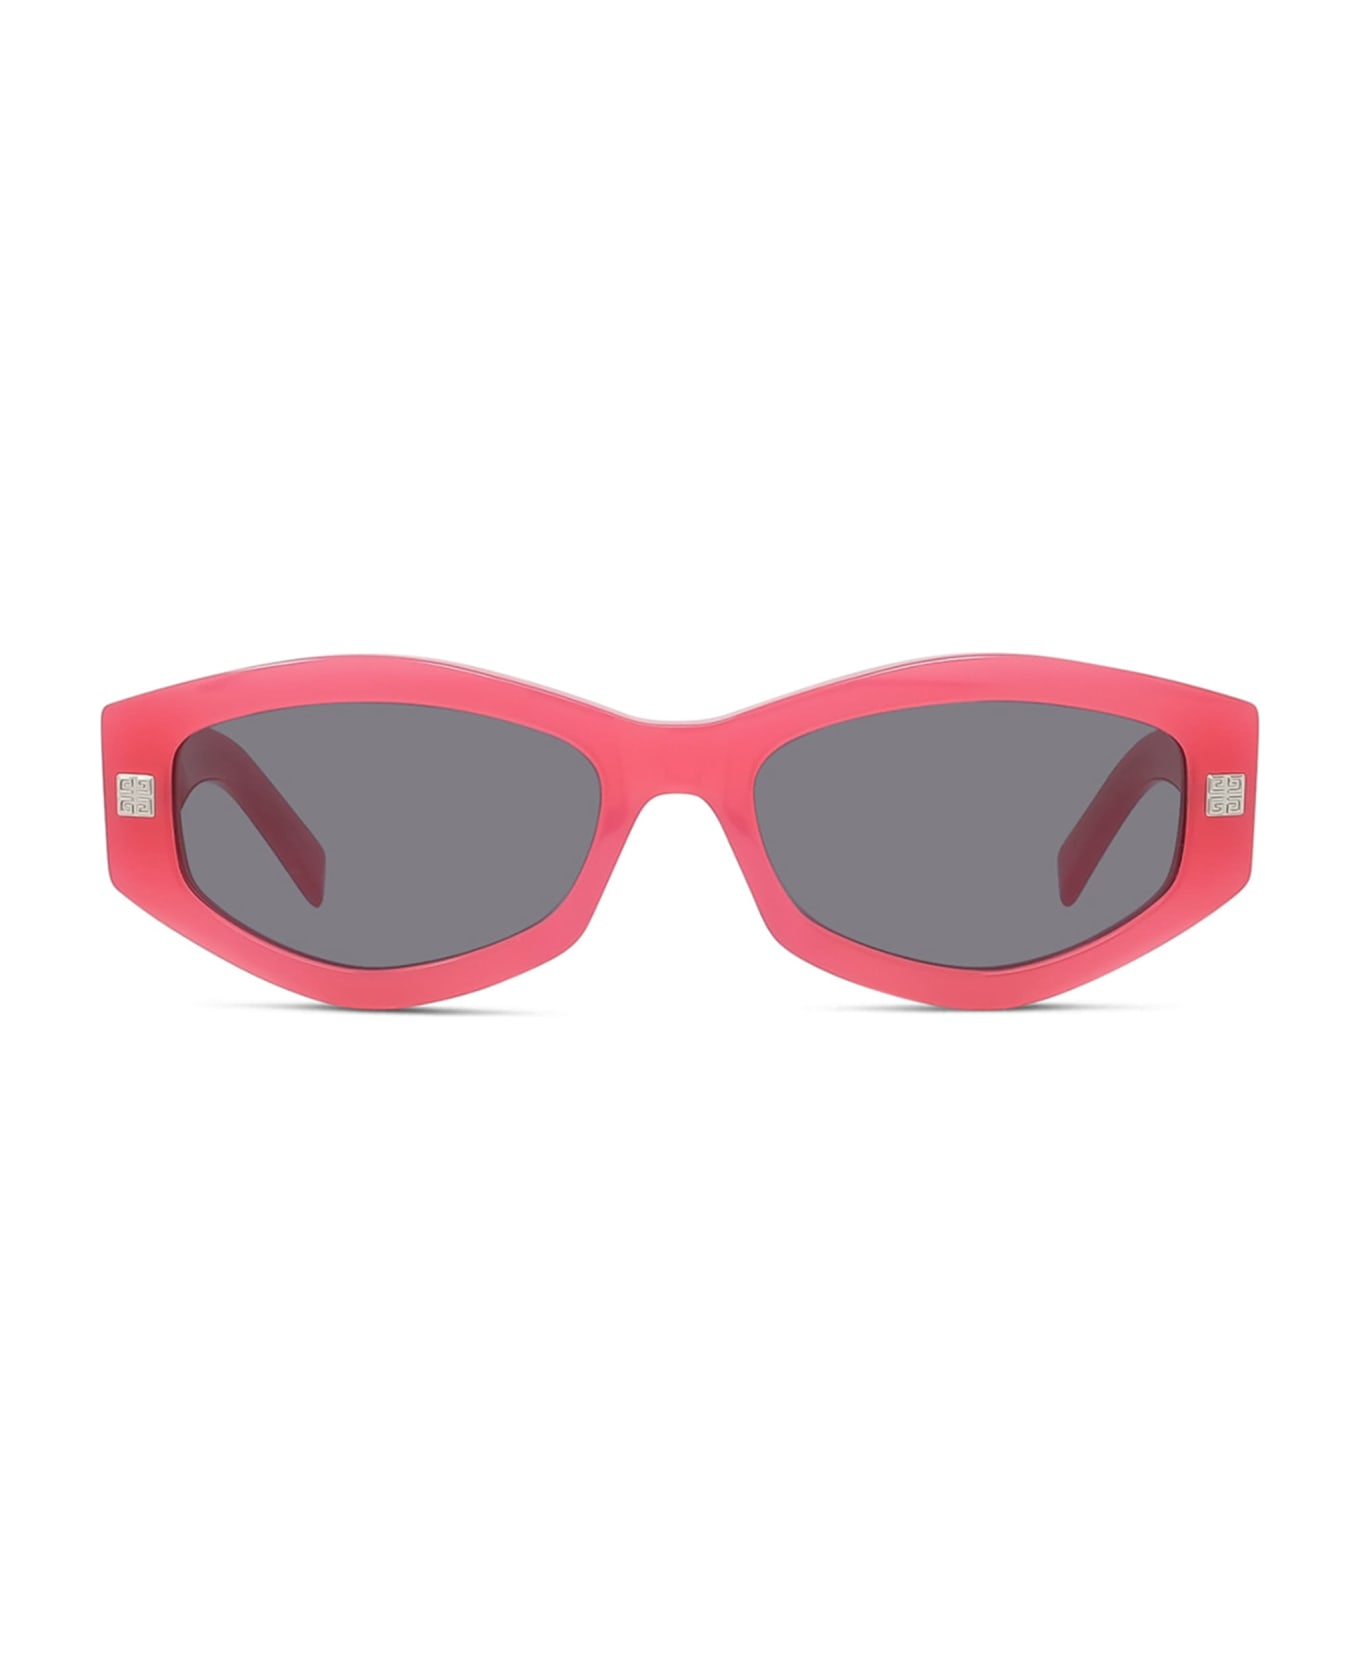 Givenchy Eyewear Gv40062i - Shiny Fuchsia Sunglasses - pink サングラス